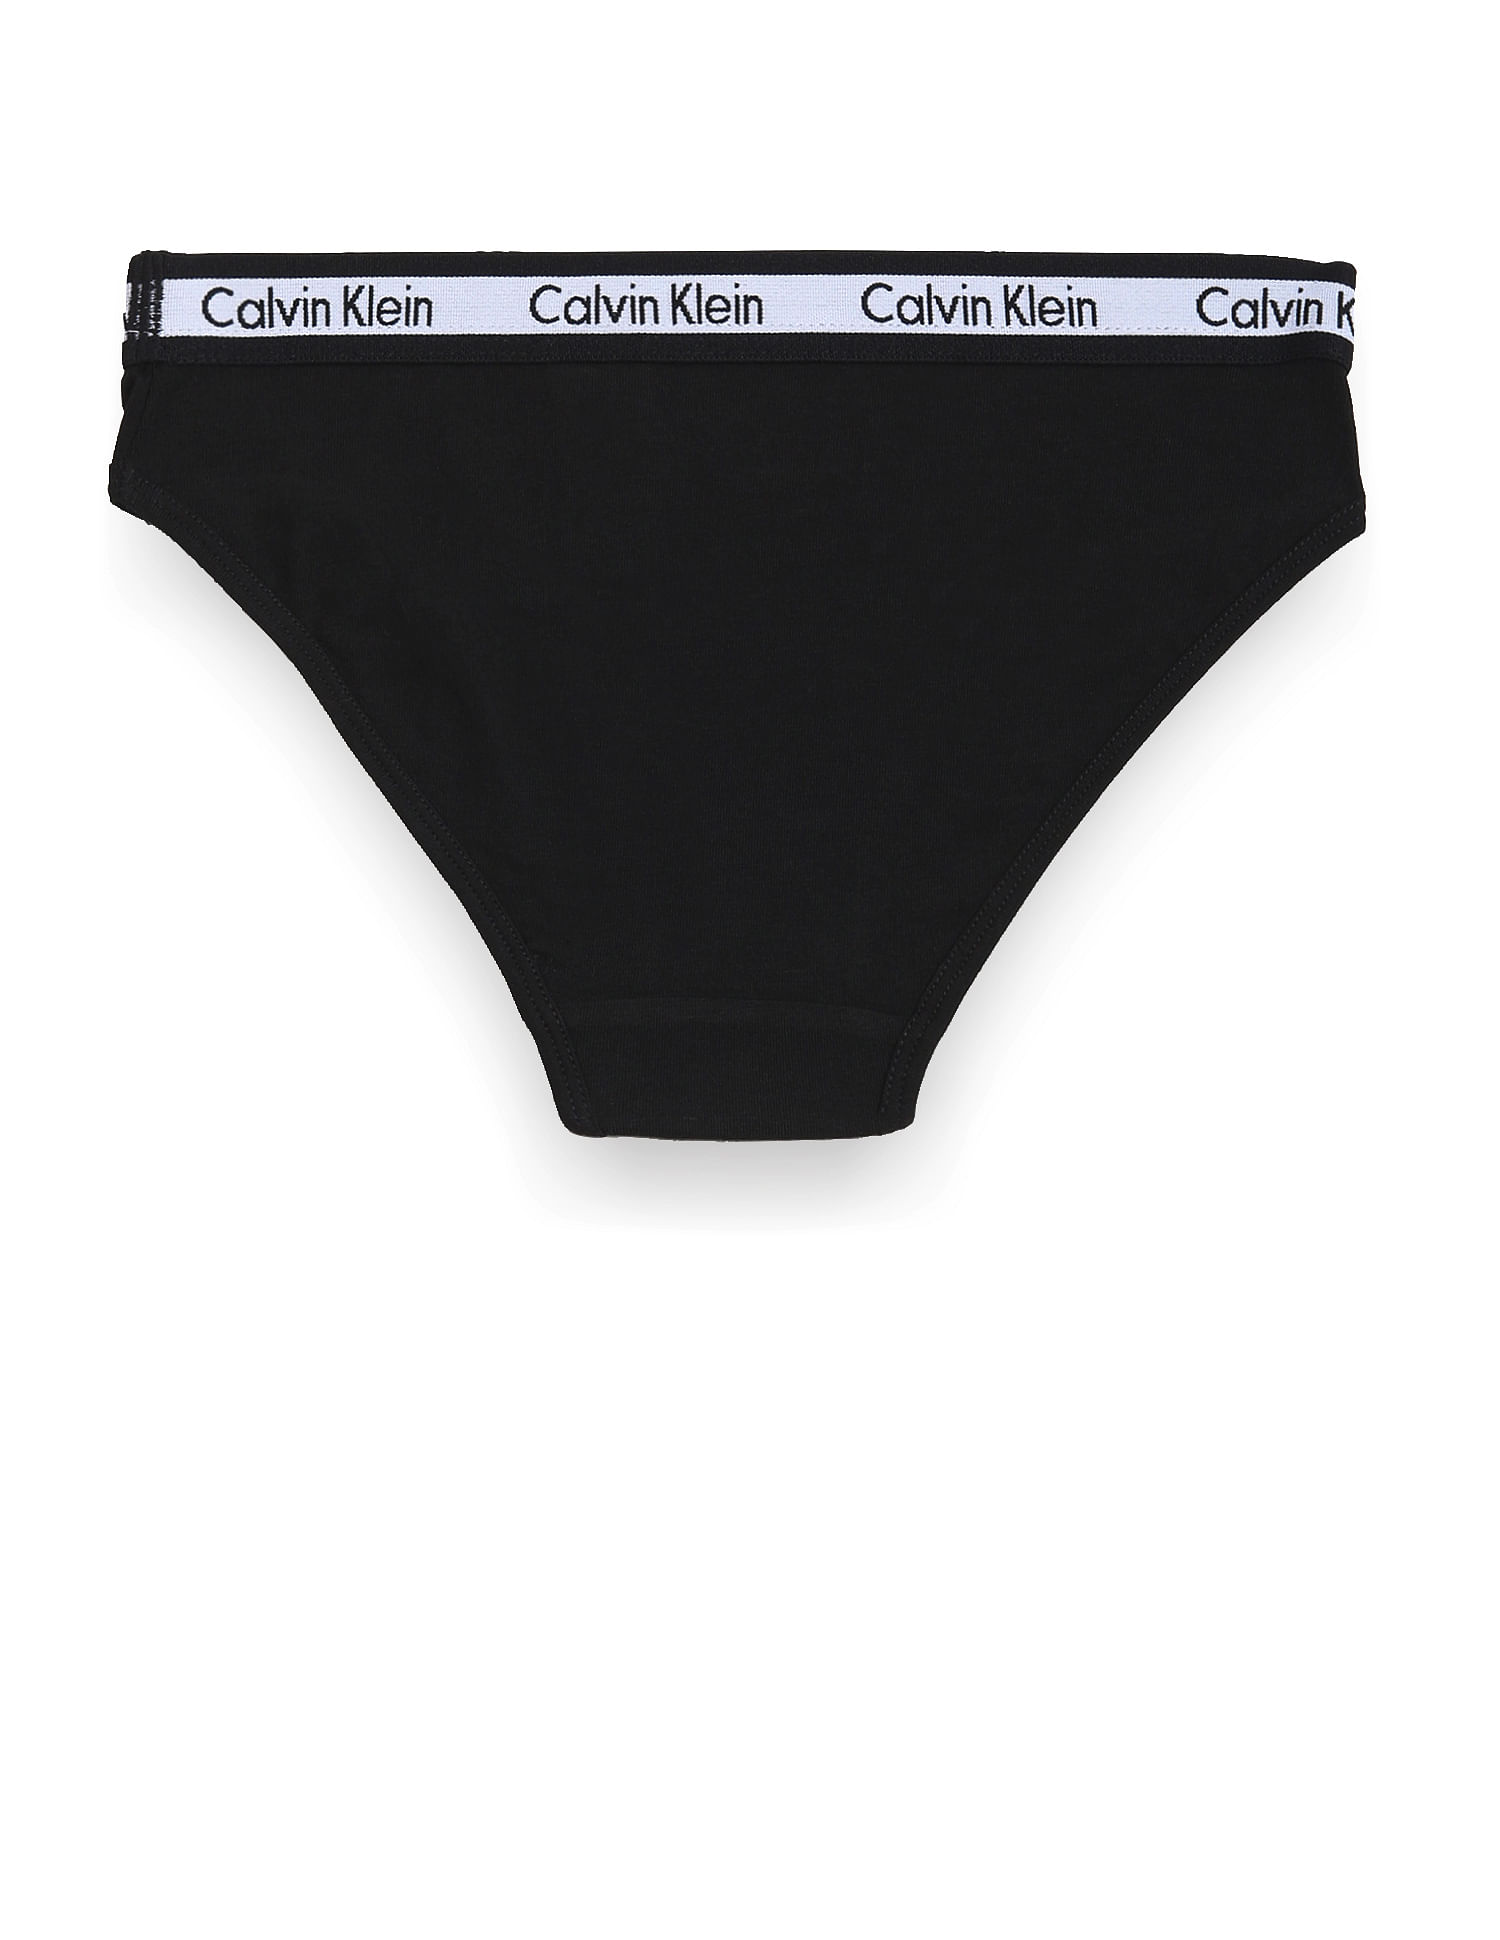 Calvin Klein Girls' Kids Modern Cotton Hipster Panties Value Pack